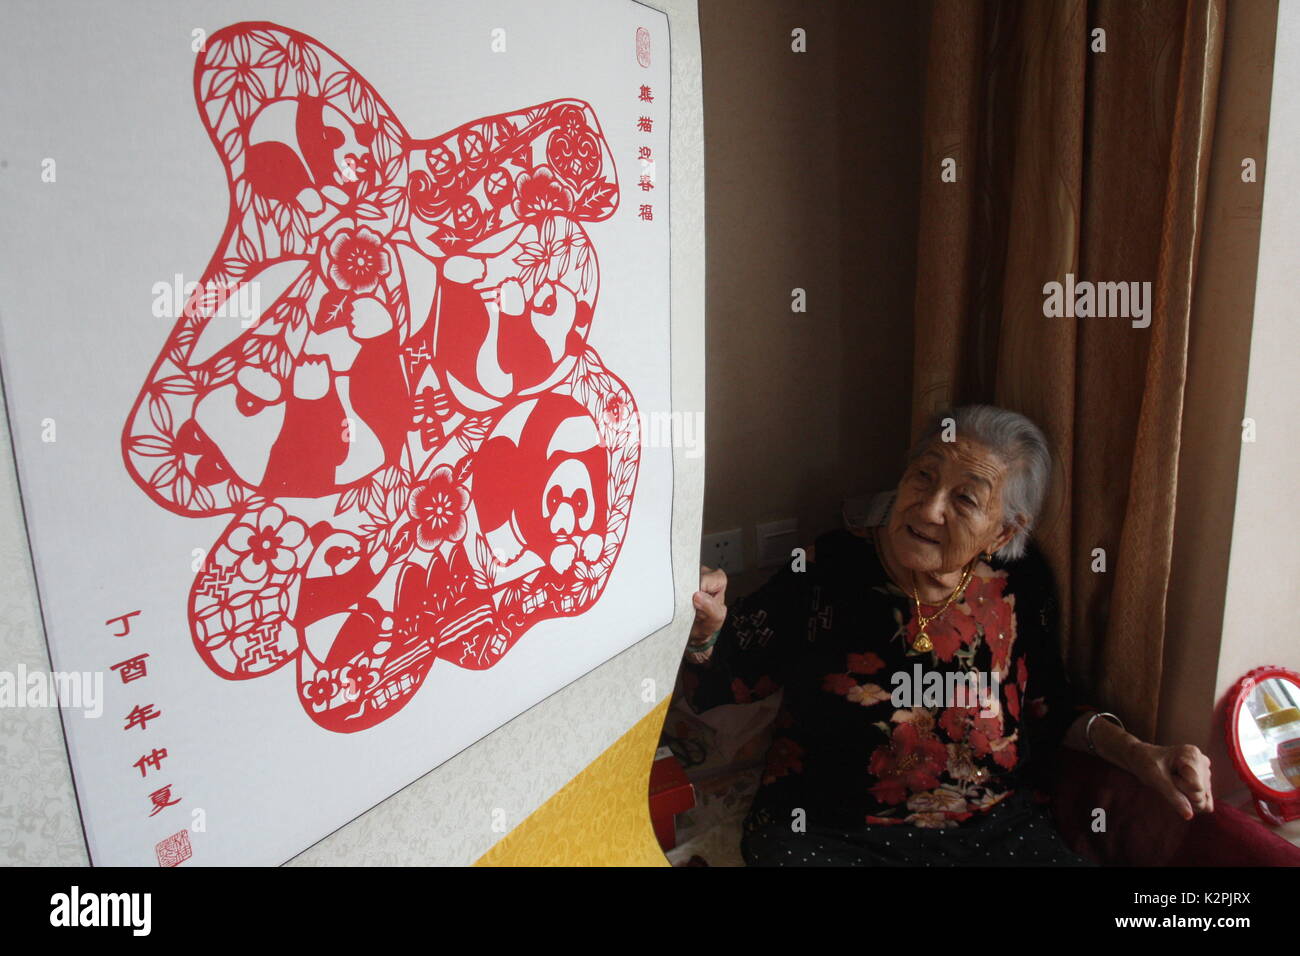 (170831) - yantai, Aug 31, 2017 (Xinhua) - Lin Guimao, 103, macht papercuttings in Yantai, Provinz Shandong, China, August 30, 2017. Lin gelernt papercutting Fähigkeiten als Kind, und jetzt immer noch gerne das Hobby. (Xinhua / Shen Jizhong) (Ry) Stockfoto